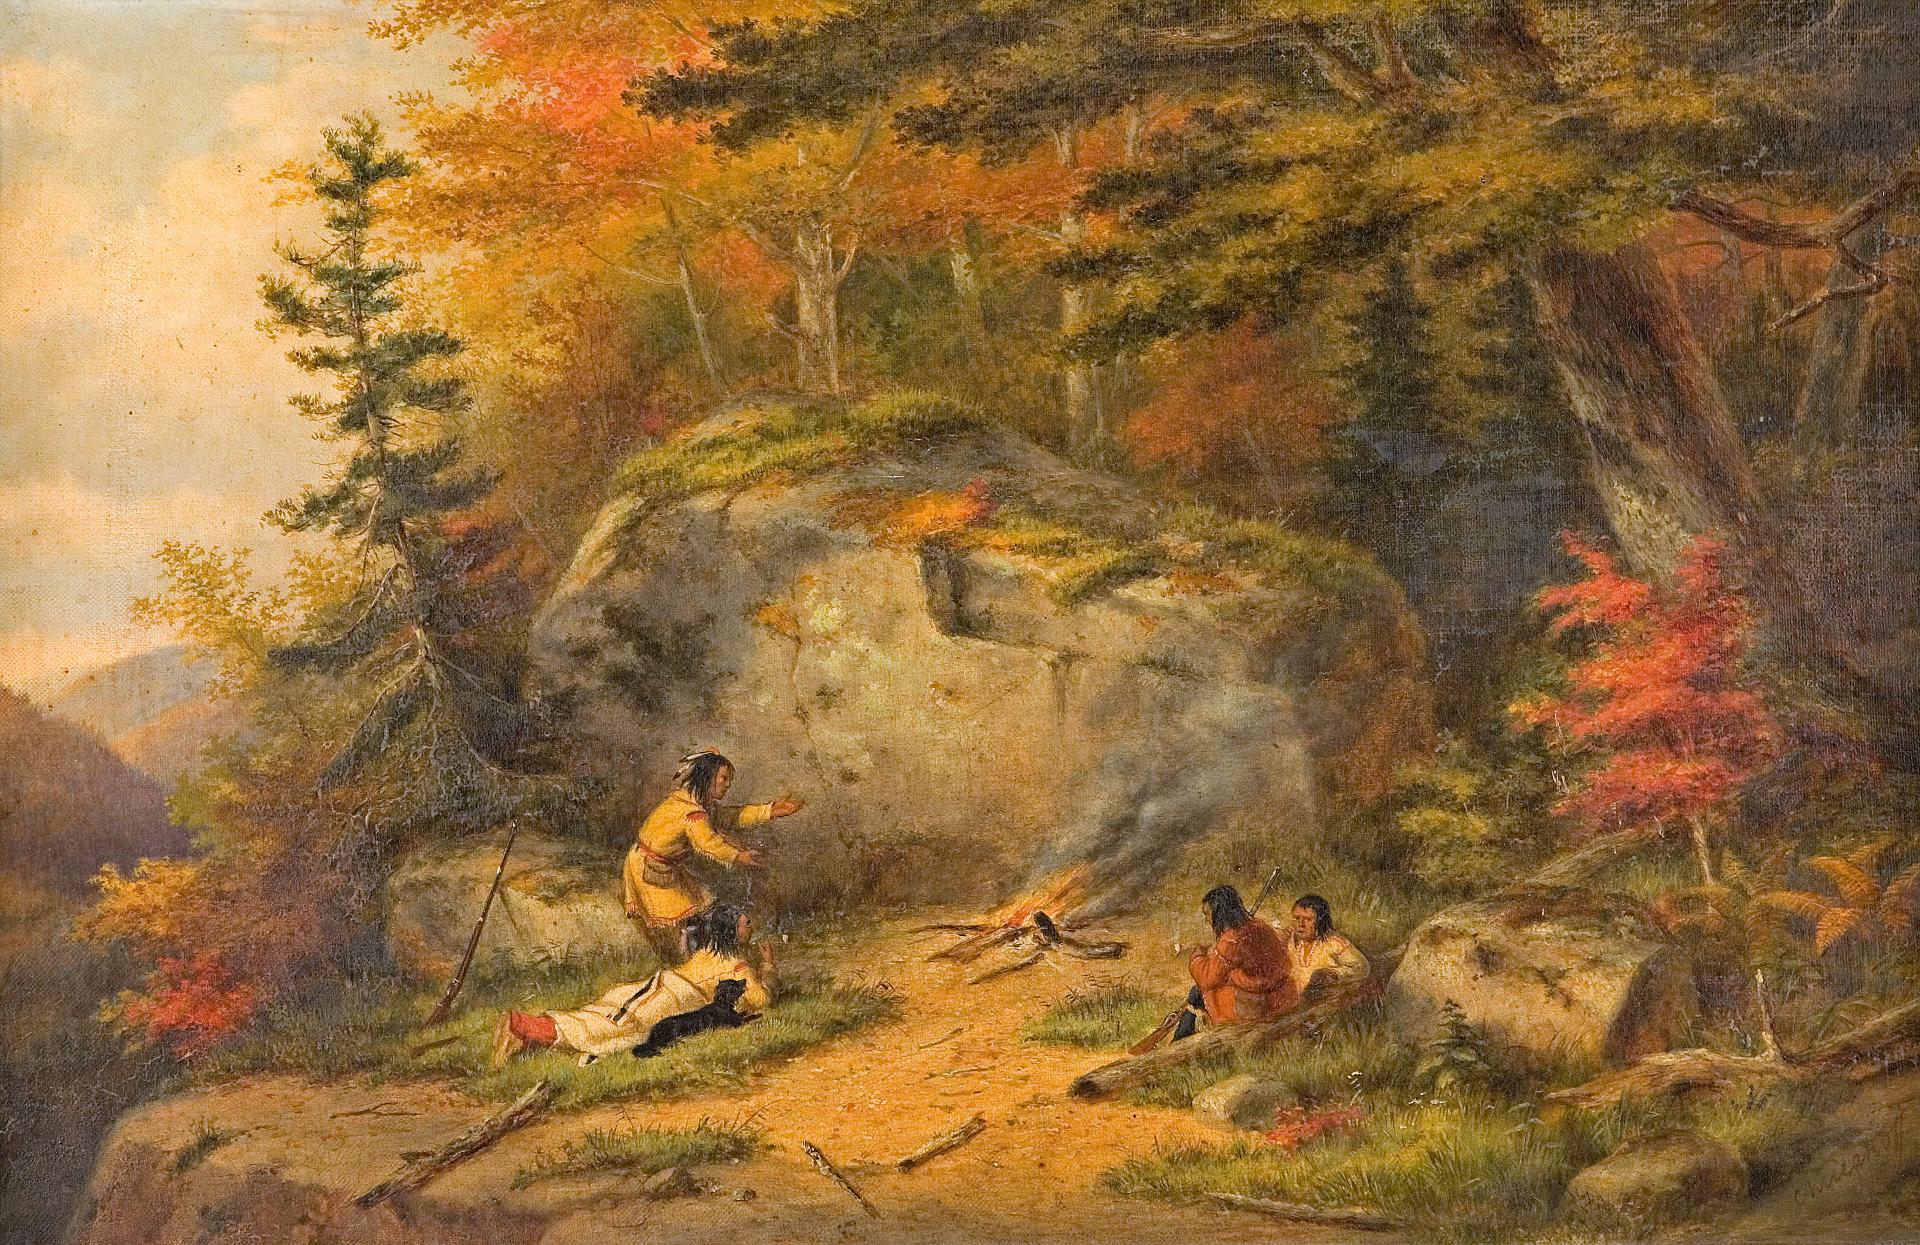 Cornelius David Krieghoff (1815-1872) - Autumn in West Canada, Chippeway Indians